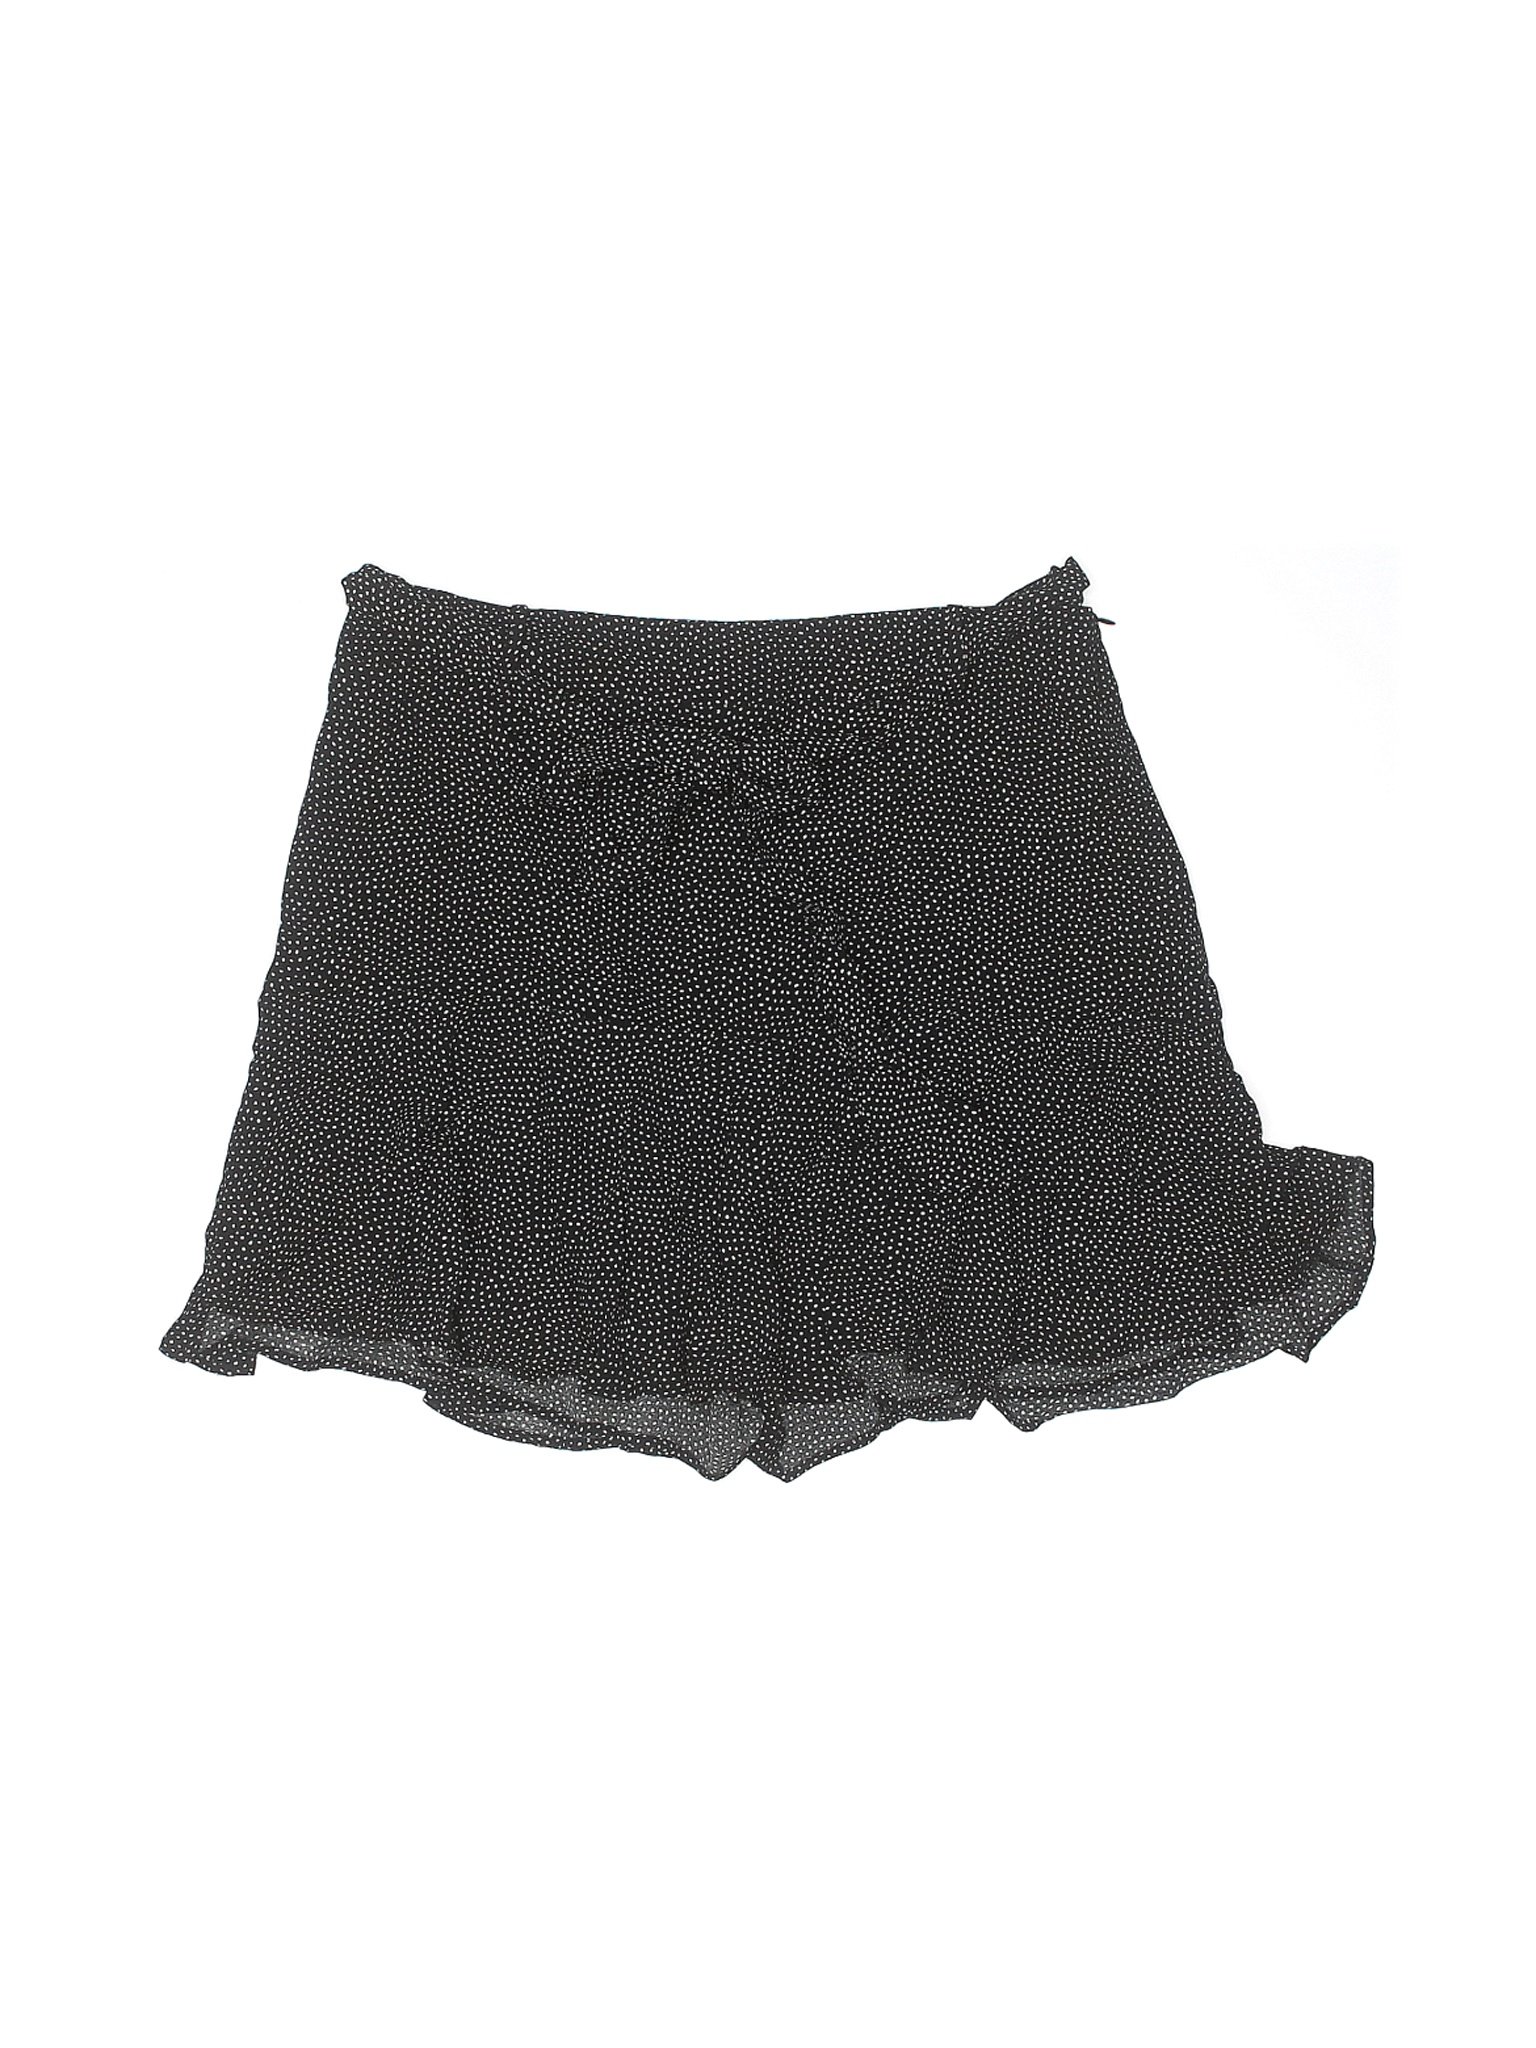 Zara Women Black Skort M | eBay